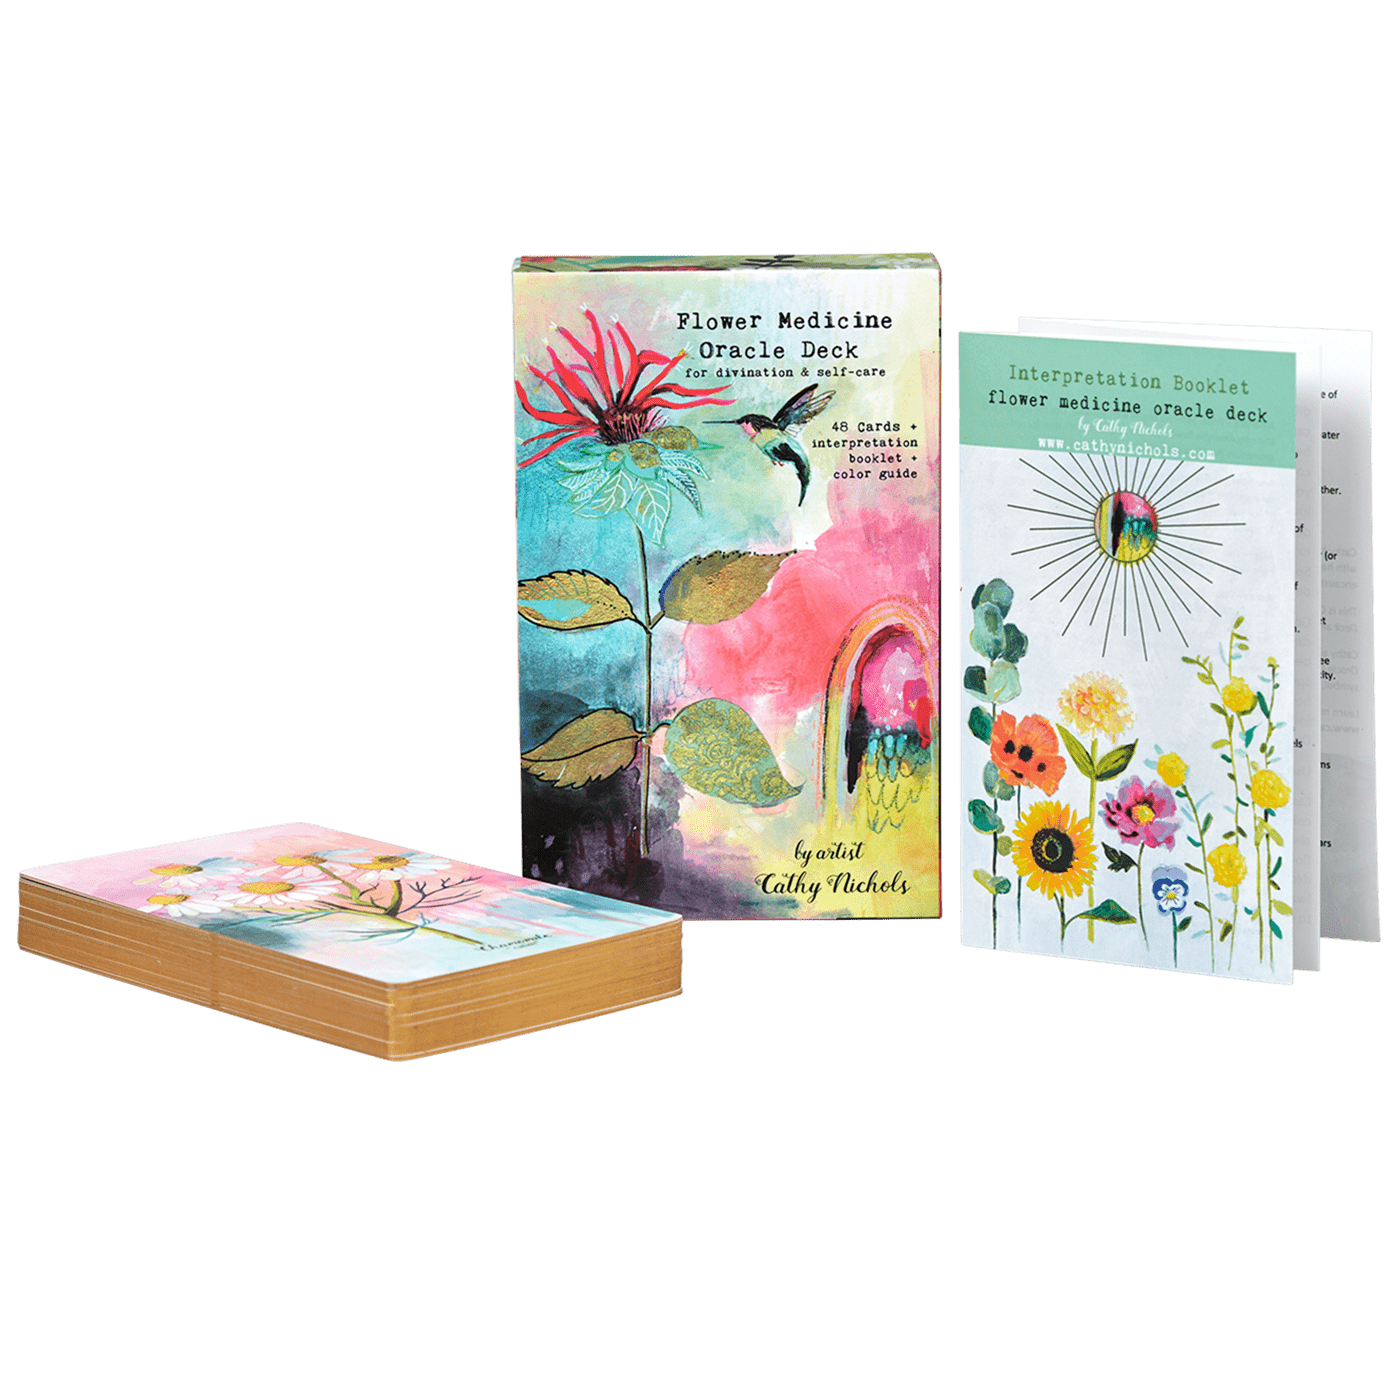 Flower Medicine Oracle